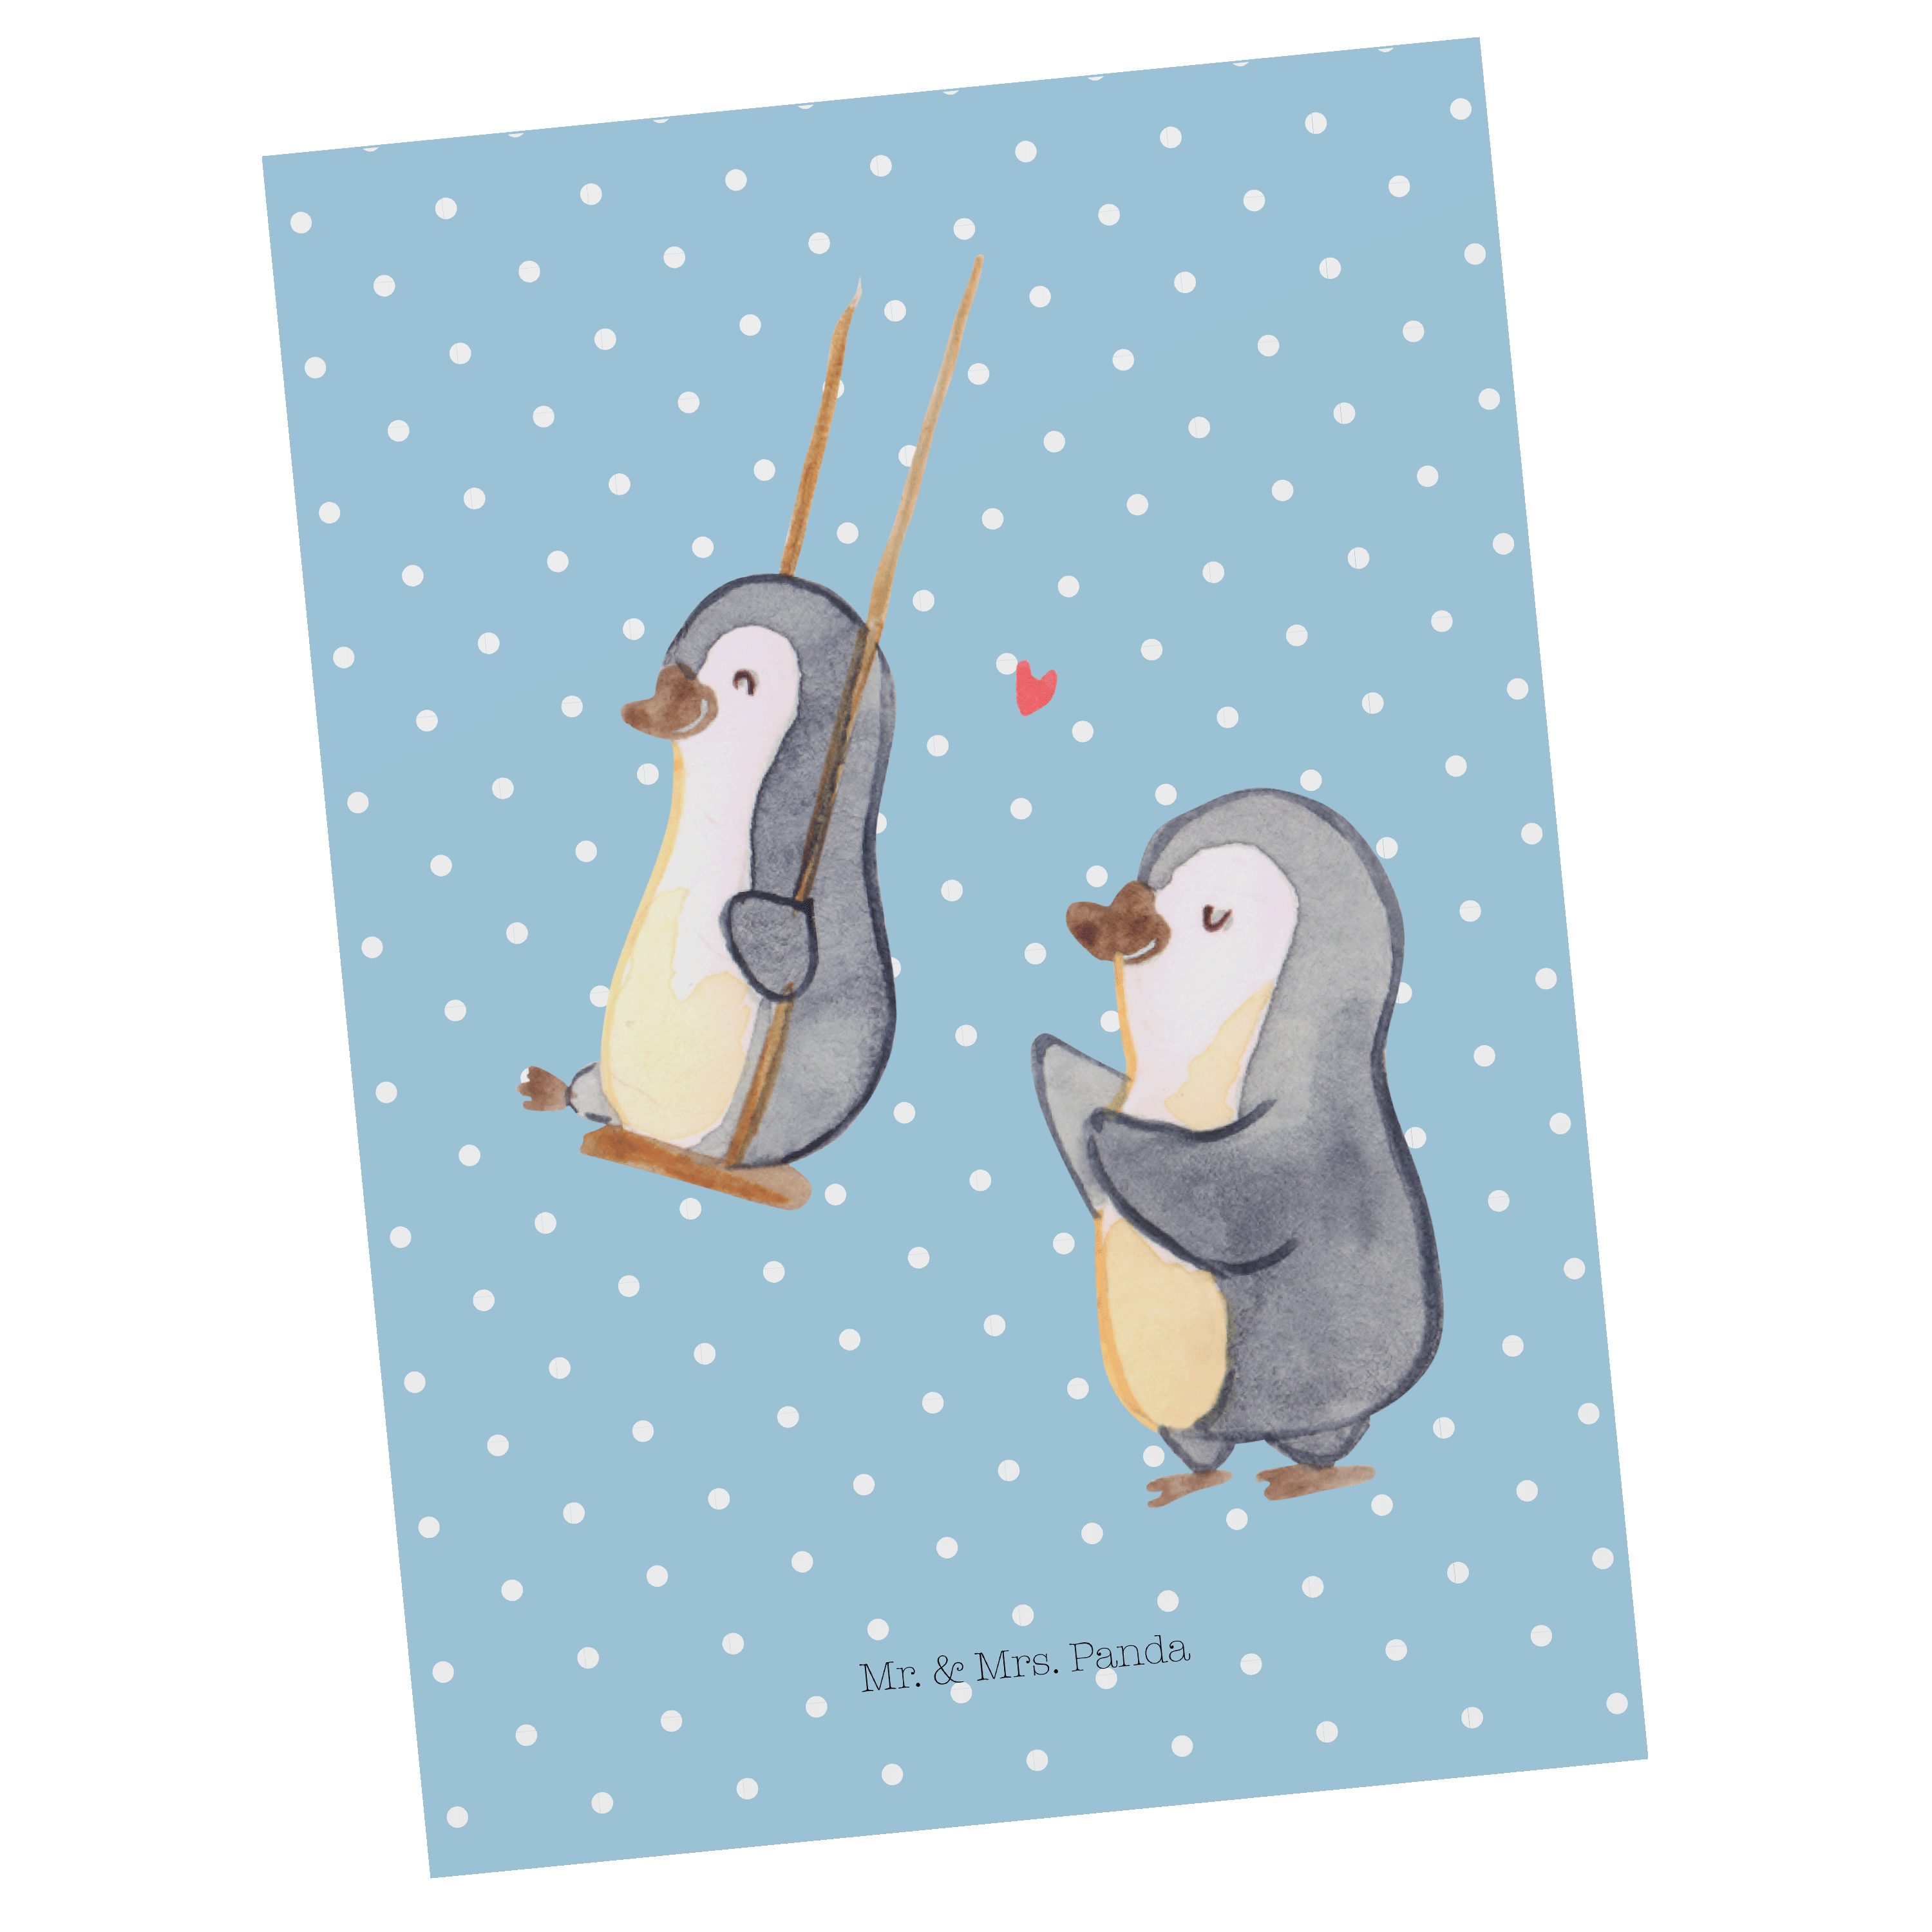 Mr. & Mrs. Panda Postkarte Pinguin Oma schaukeln - Blau Pastell - Geschenk, Lieblingsoma, Schwes